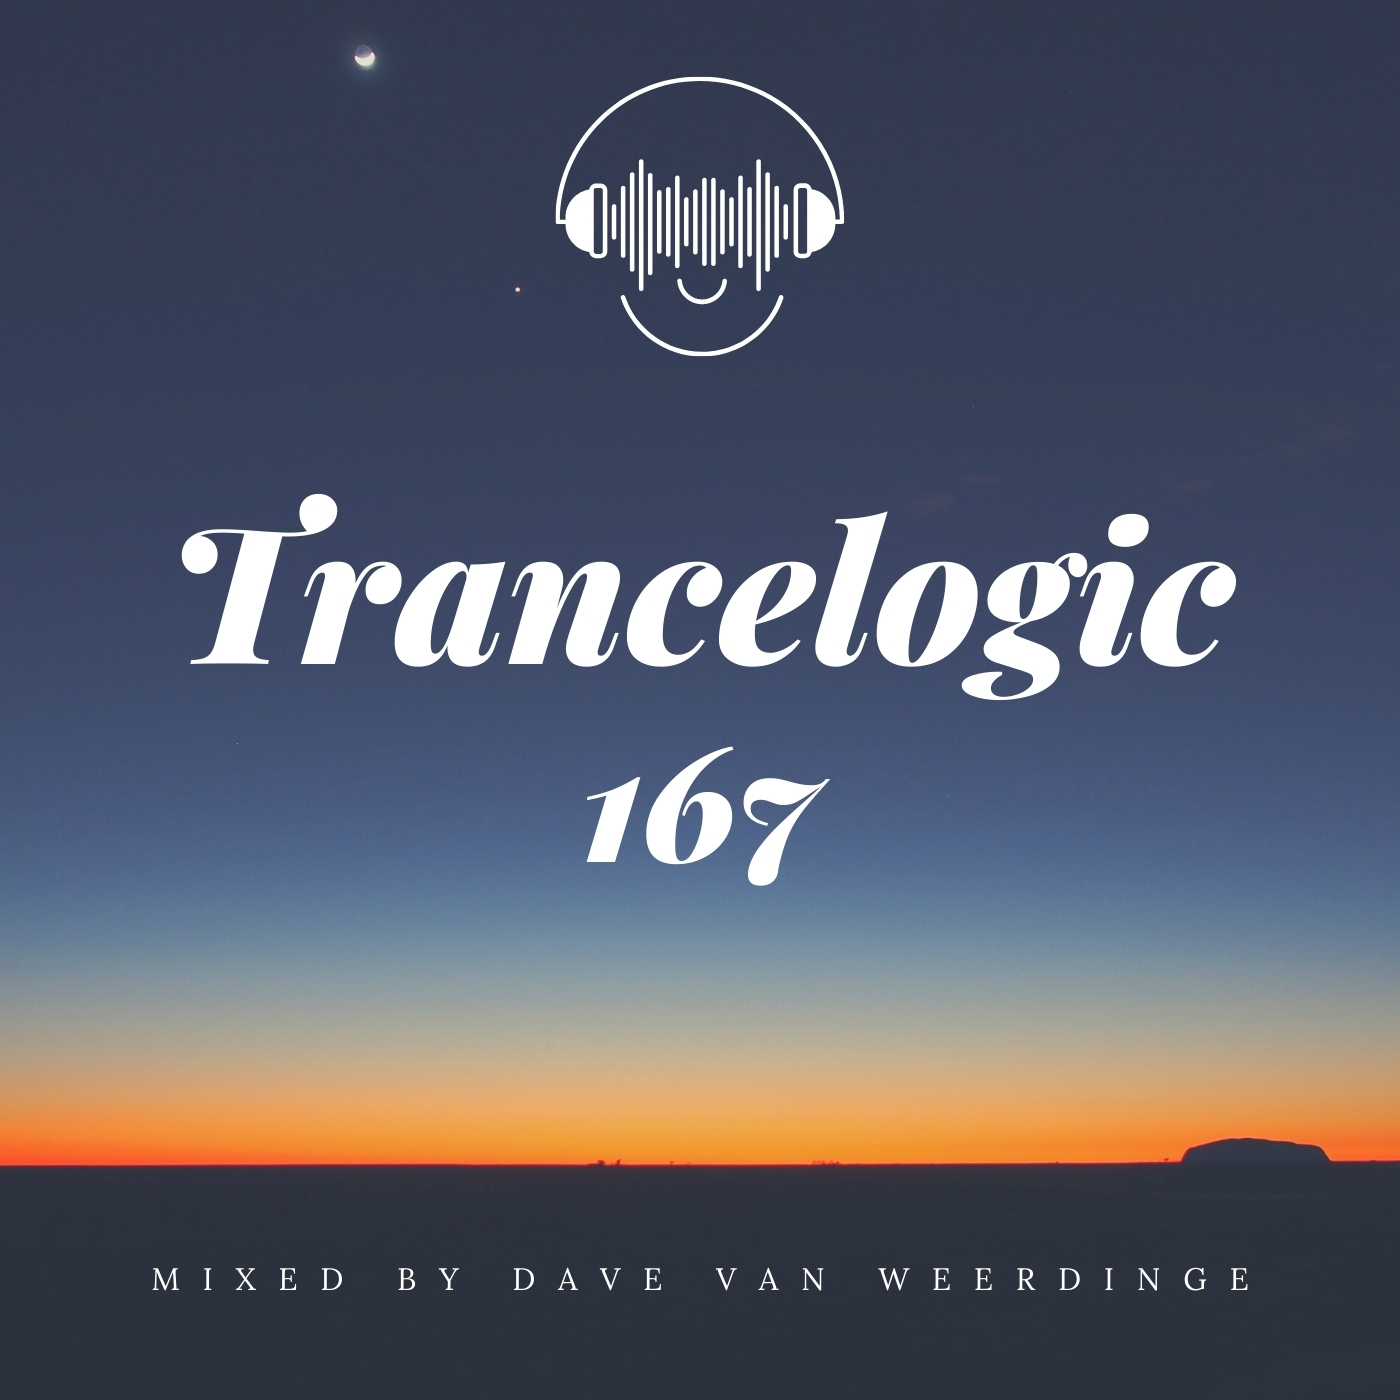 Trancelogic 167 by Dave van Weerdinge